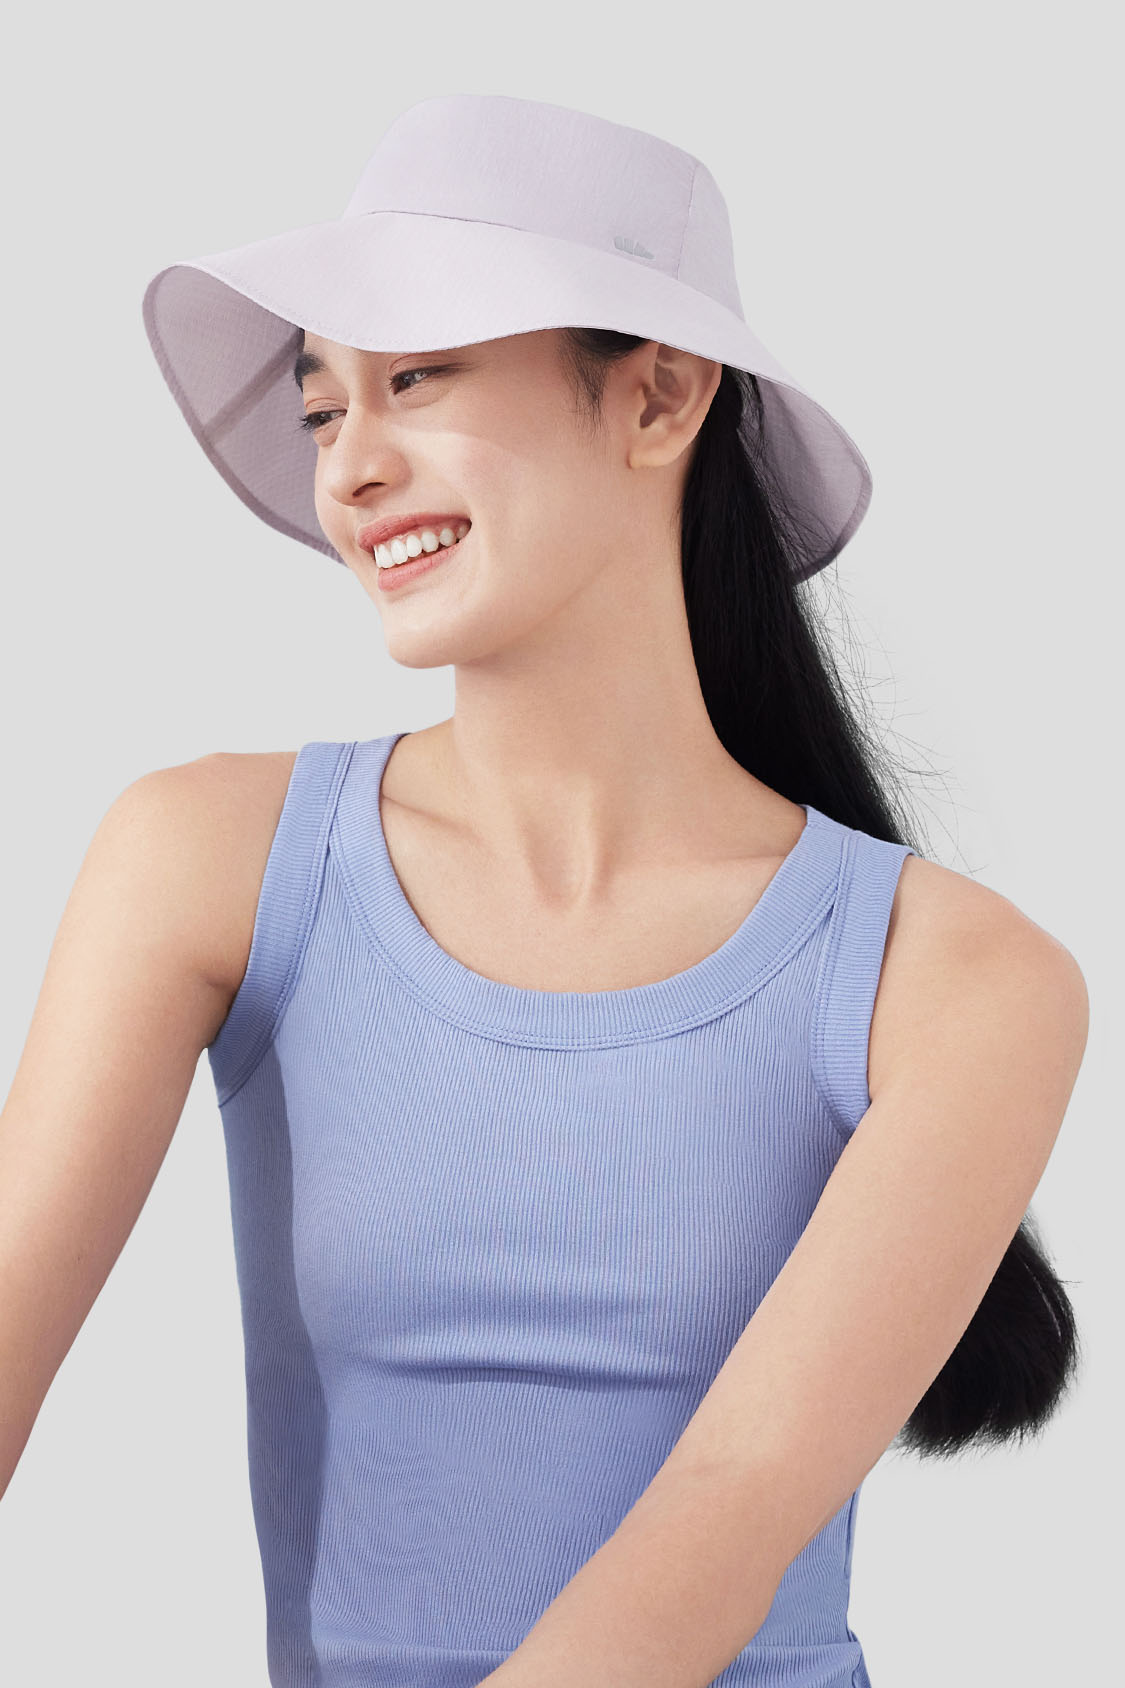 Veil - Women's Lightweight Breathable Sun Hat UPF50+